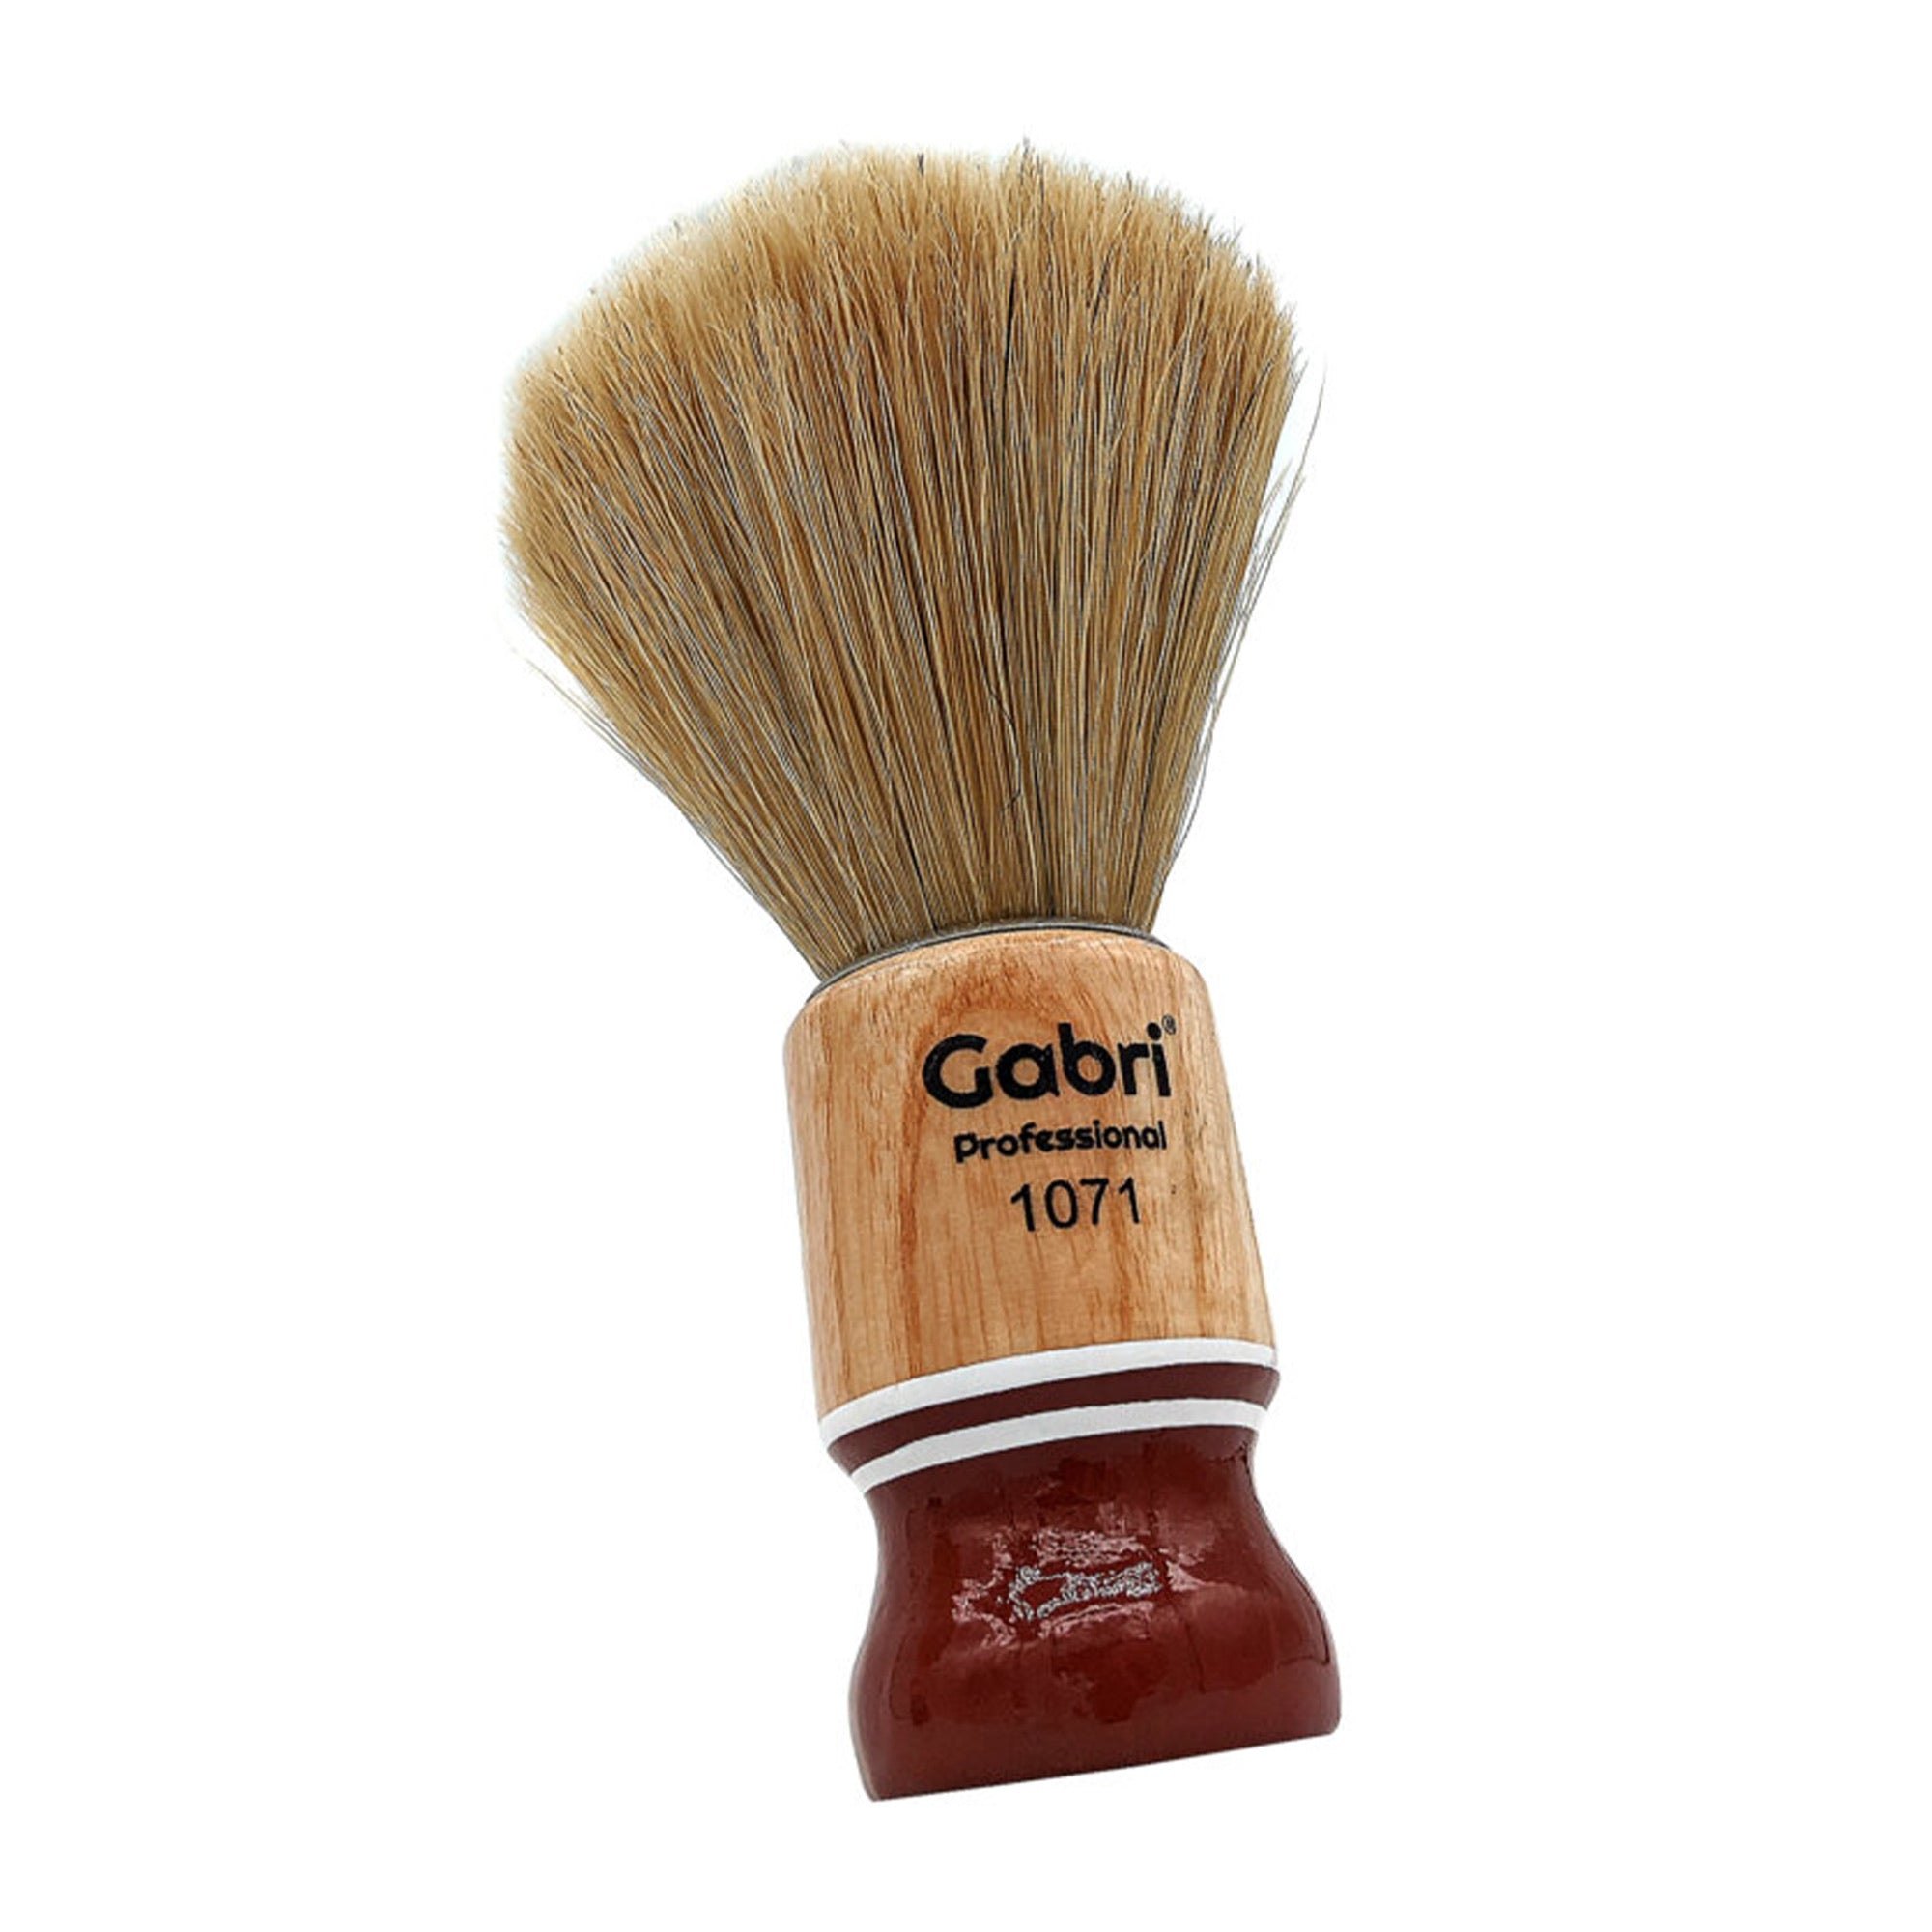 Gabri - Shaving Brush Authentic Wooden Hand Made 1071 13.5cm (Brown)